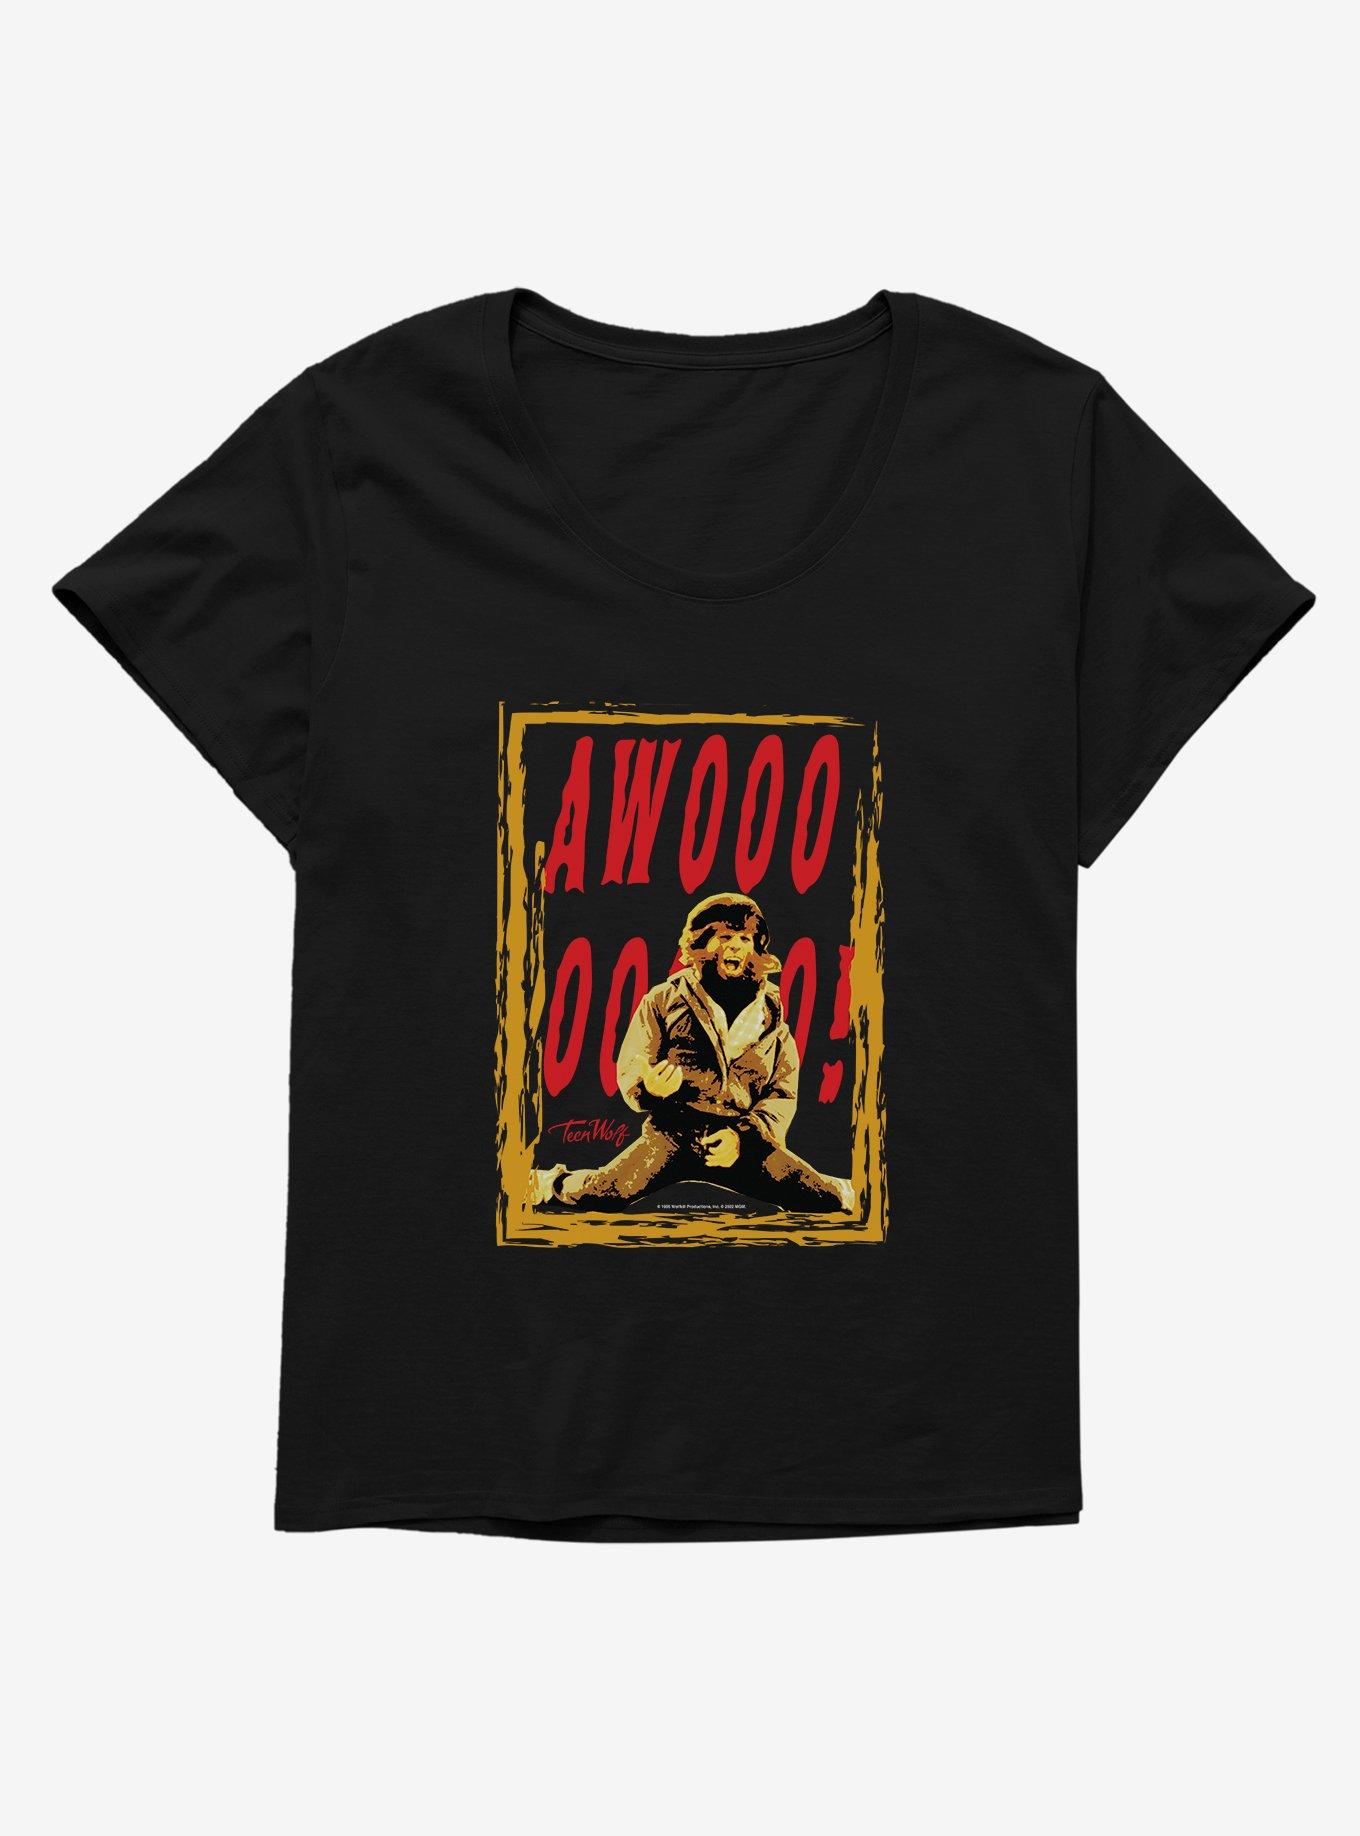 Teen Wolf Awoooo! Girls T-Shirt Plus Size, BLACK, hi-res